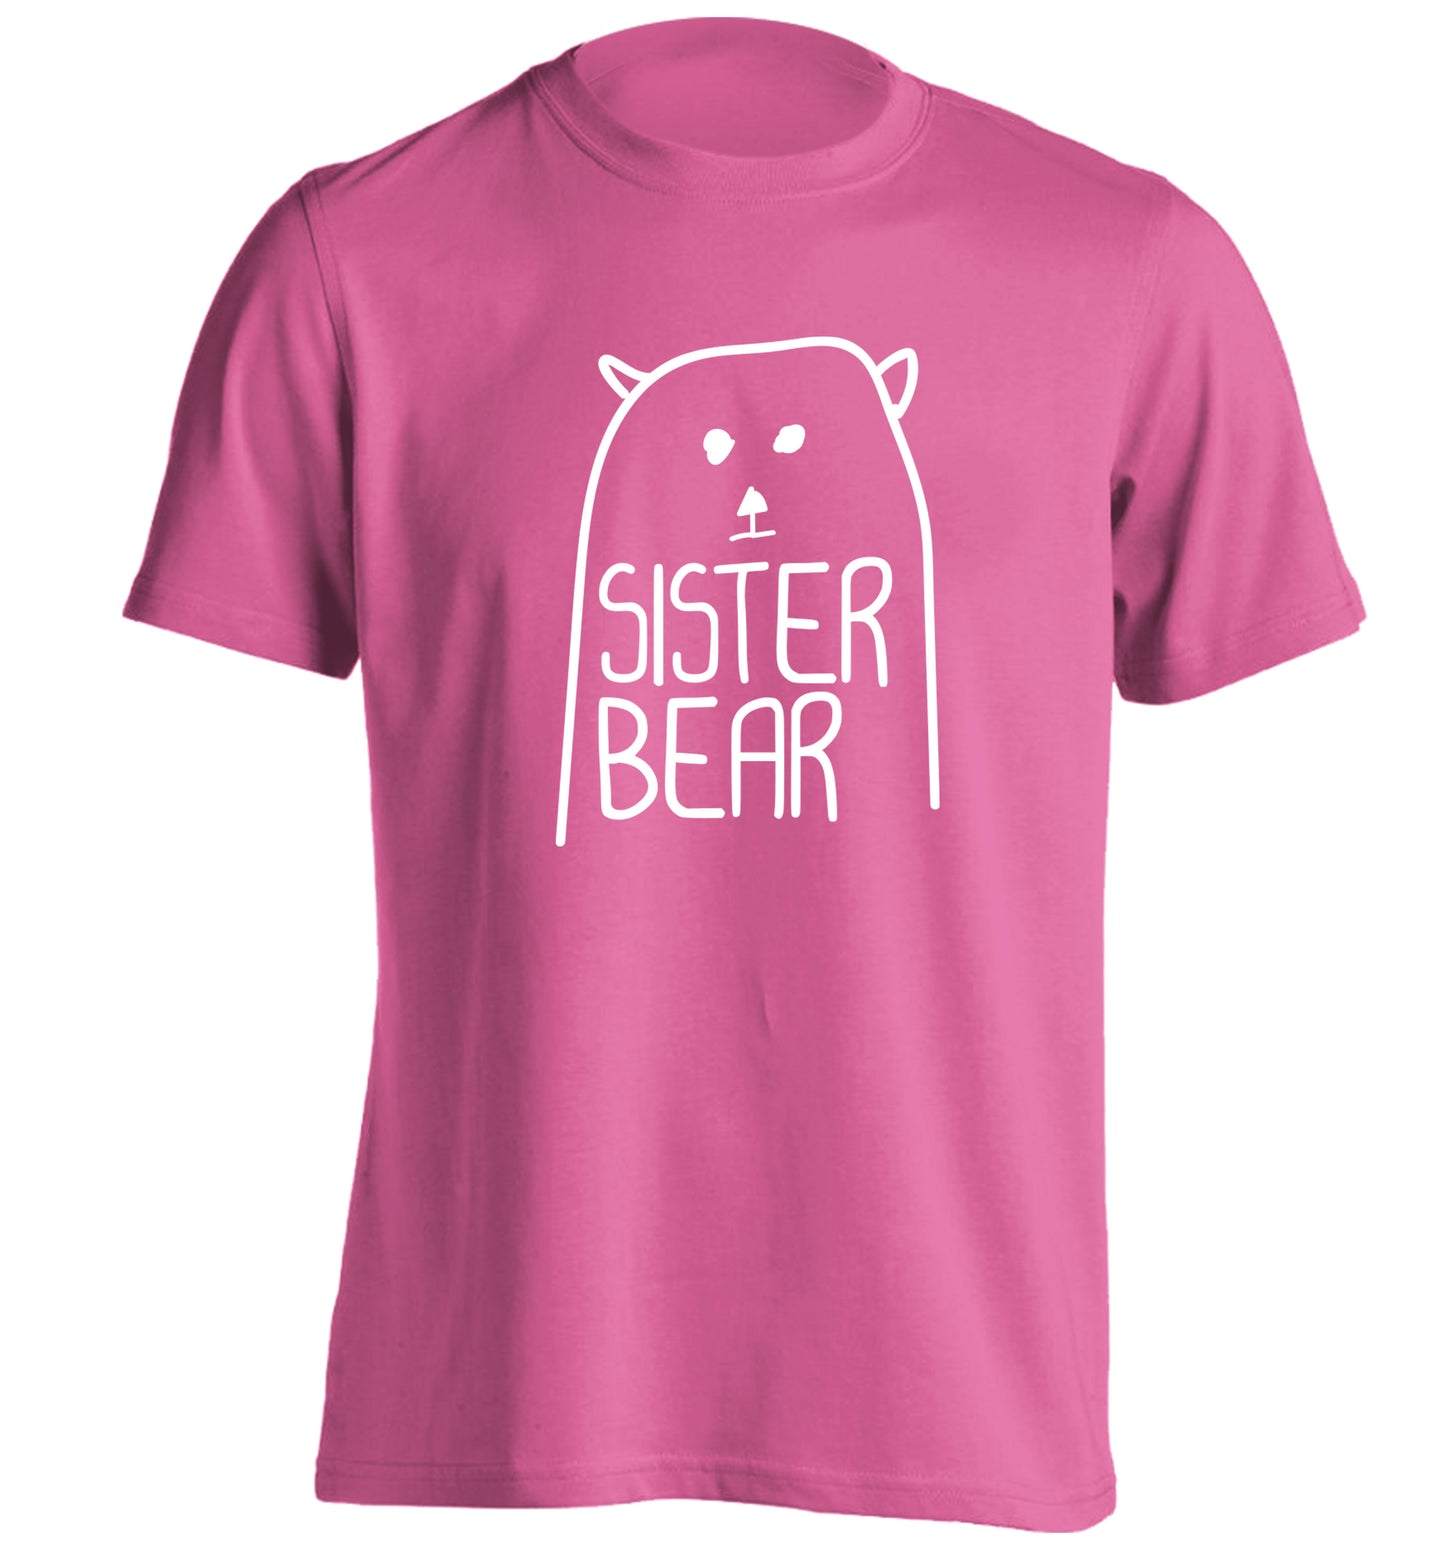 Sister bear adults unisex pink Tshirt 2XL